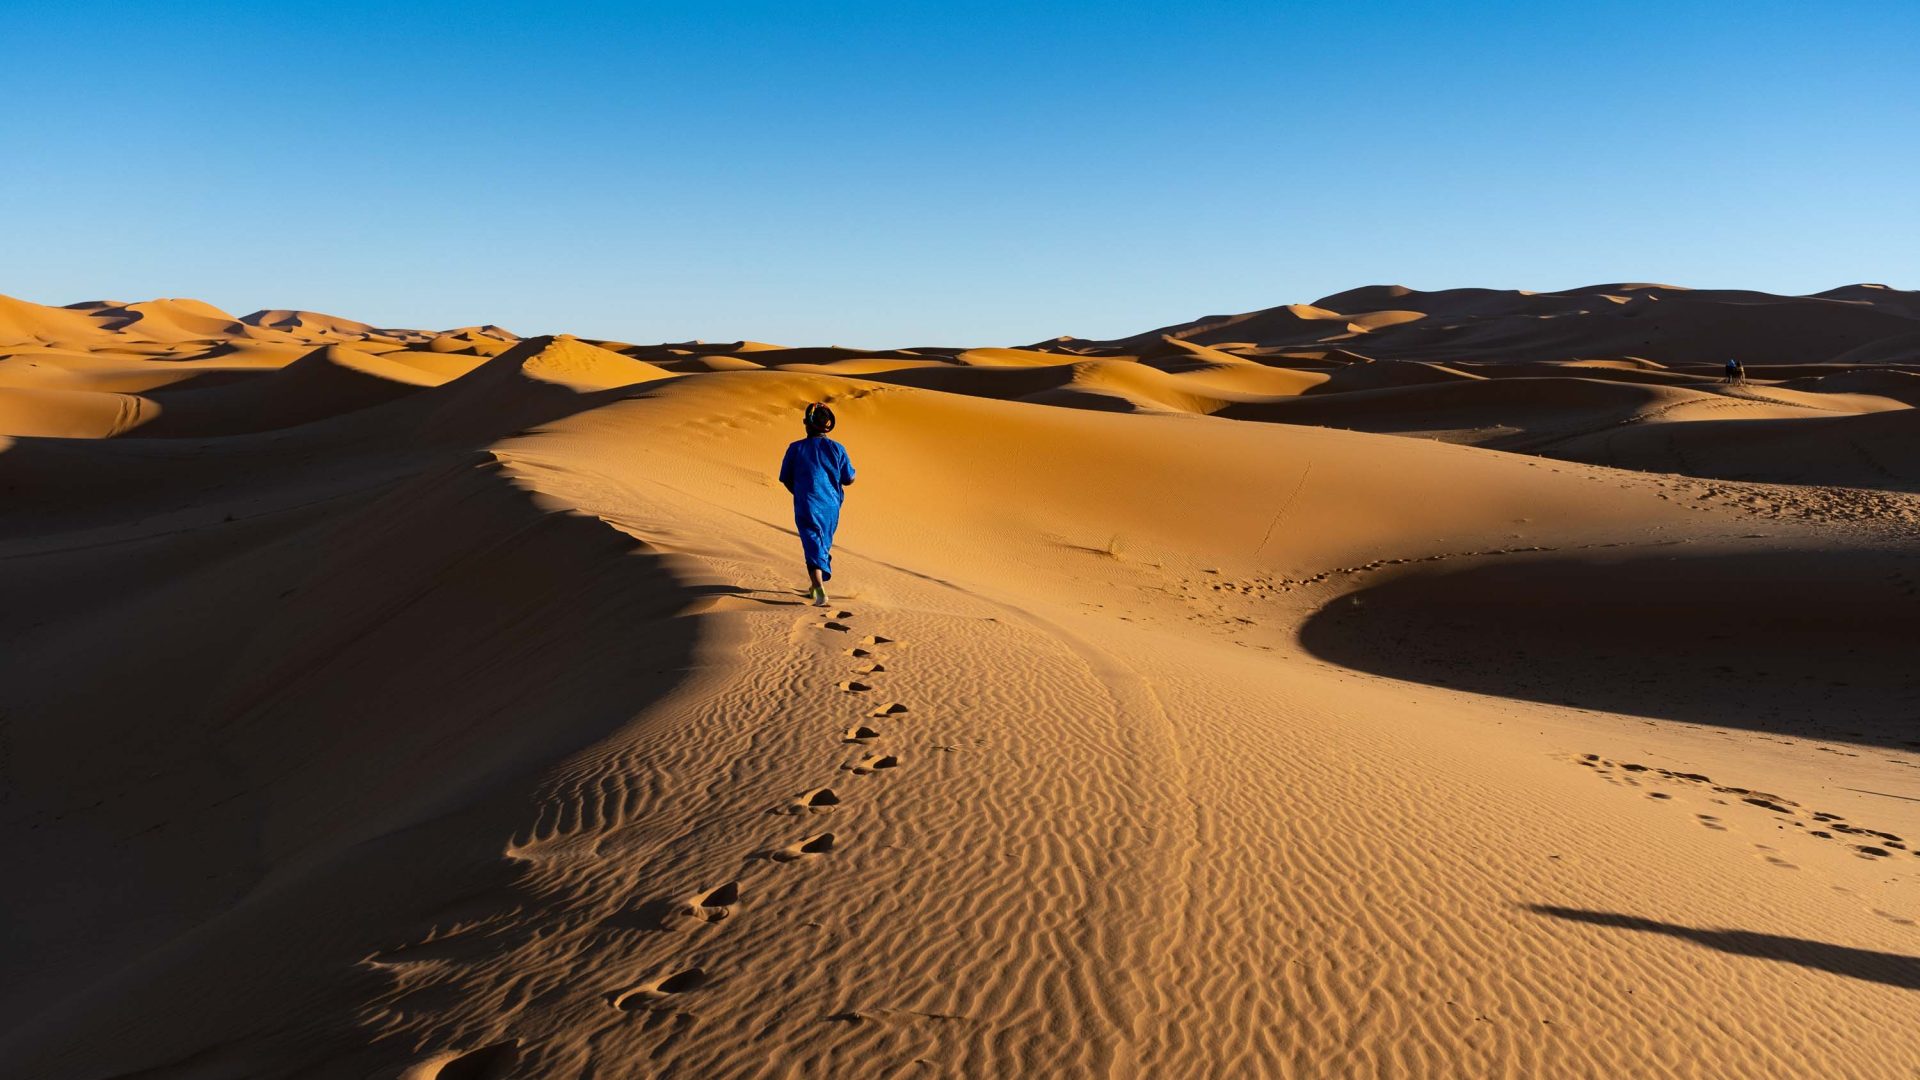 A man in blue walks through the desert.